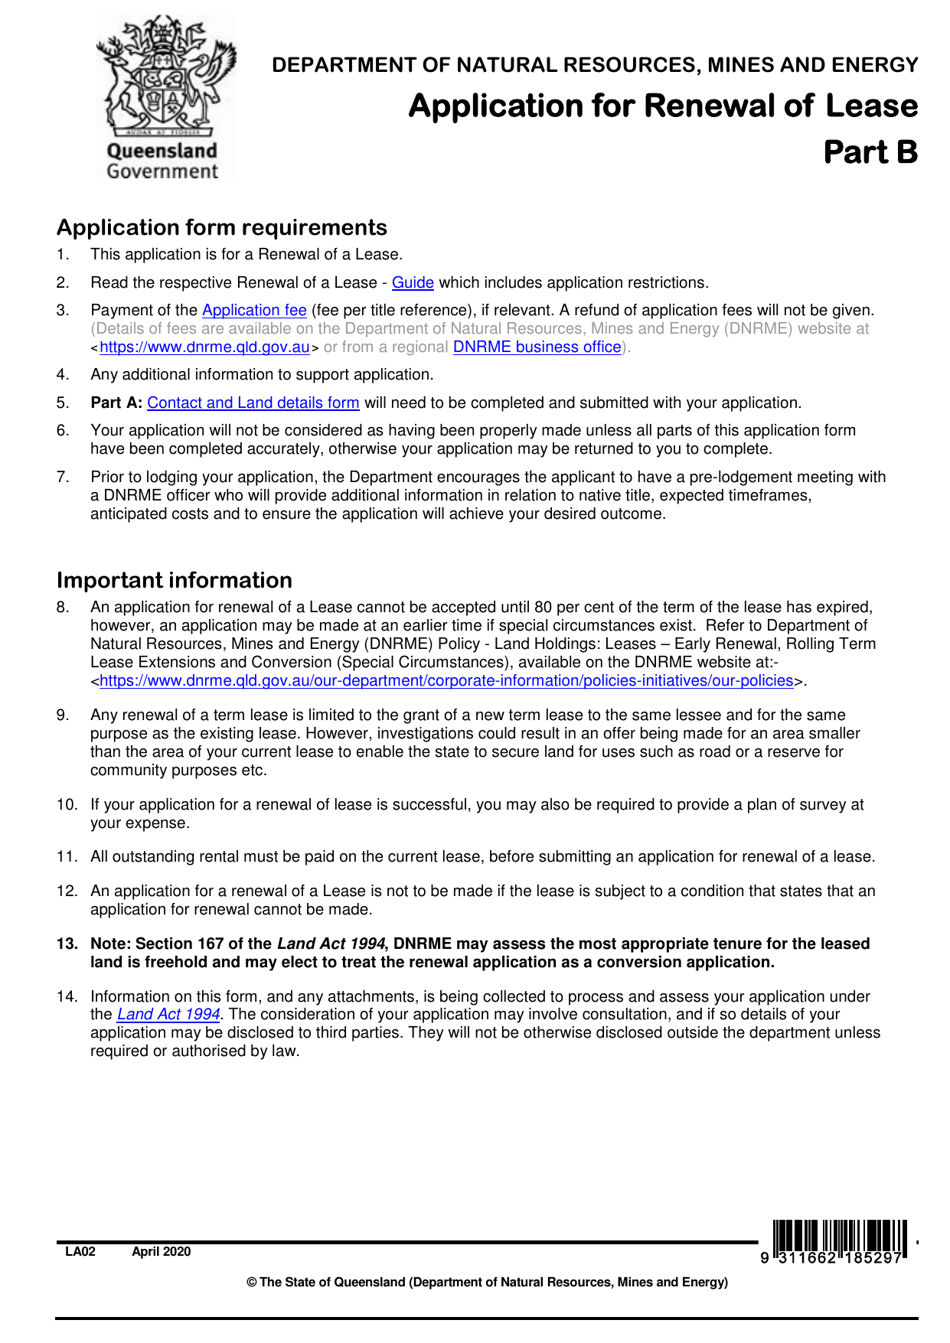 Form LA02 Part B Application for Renewal of Lease - Queensland, Australia, Page 1